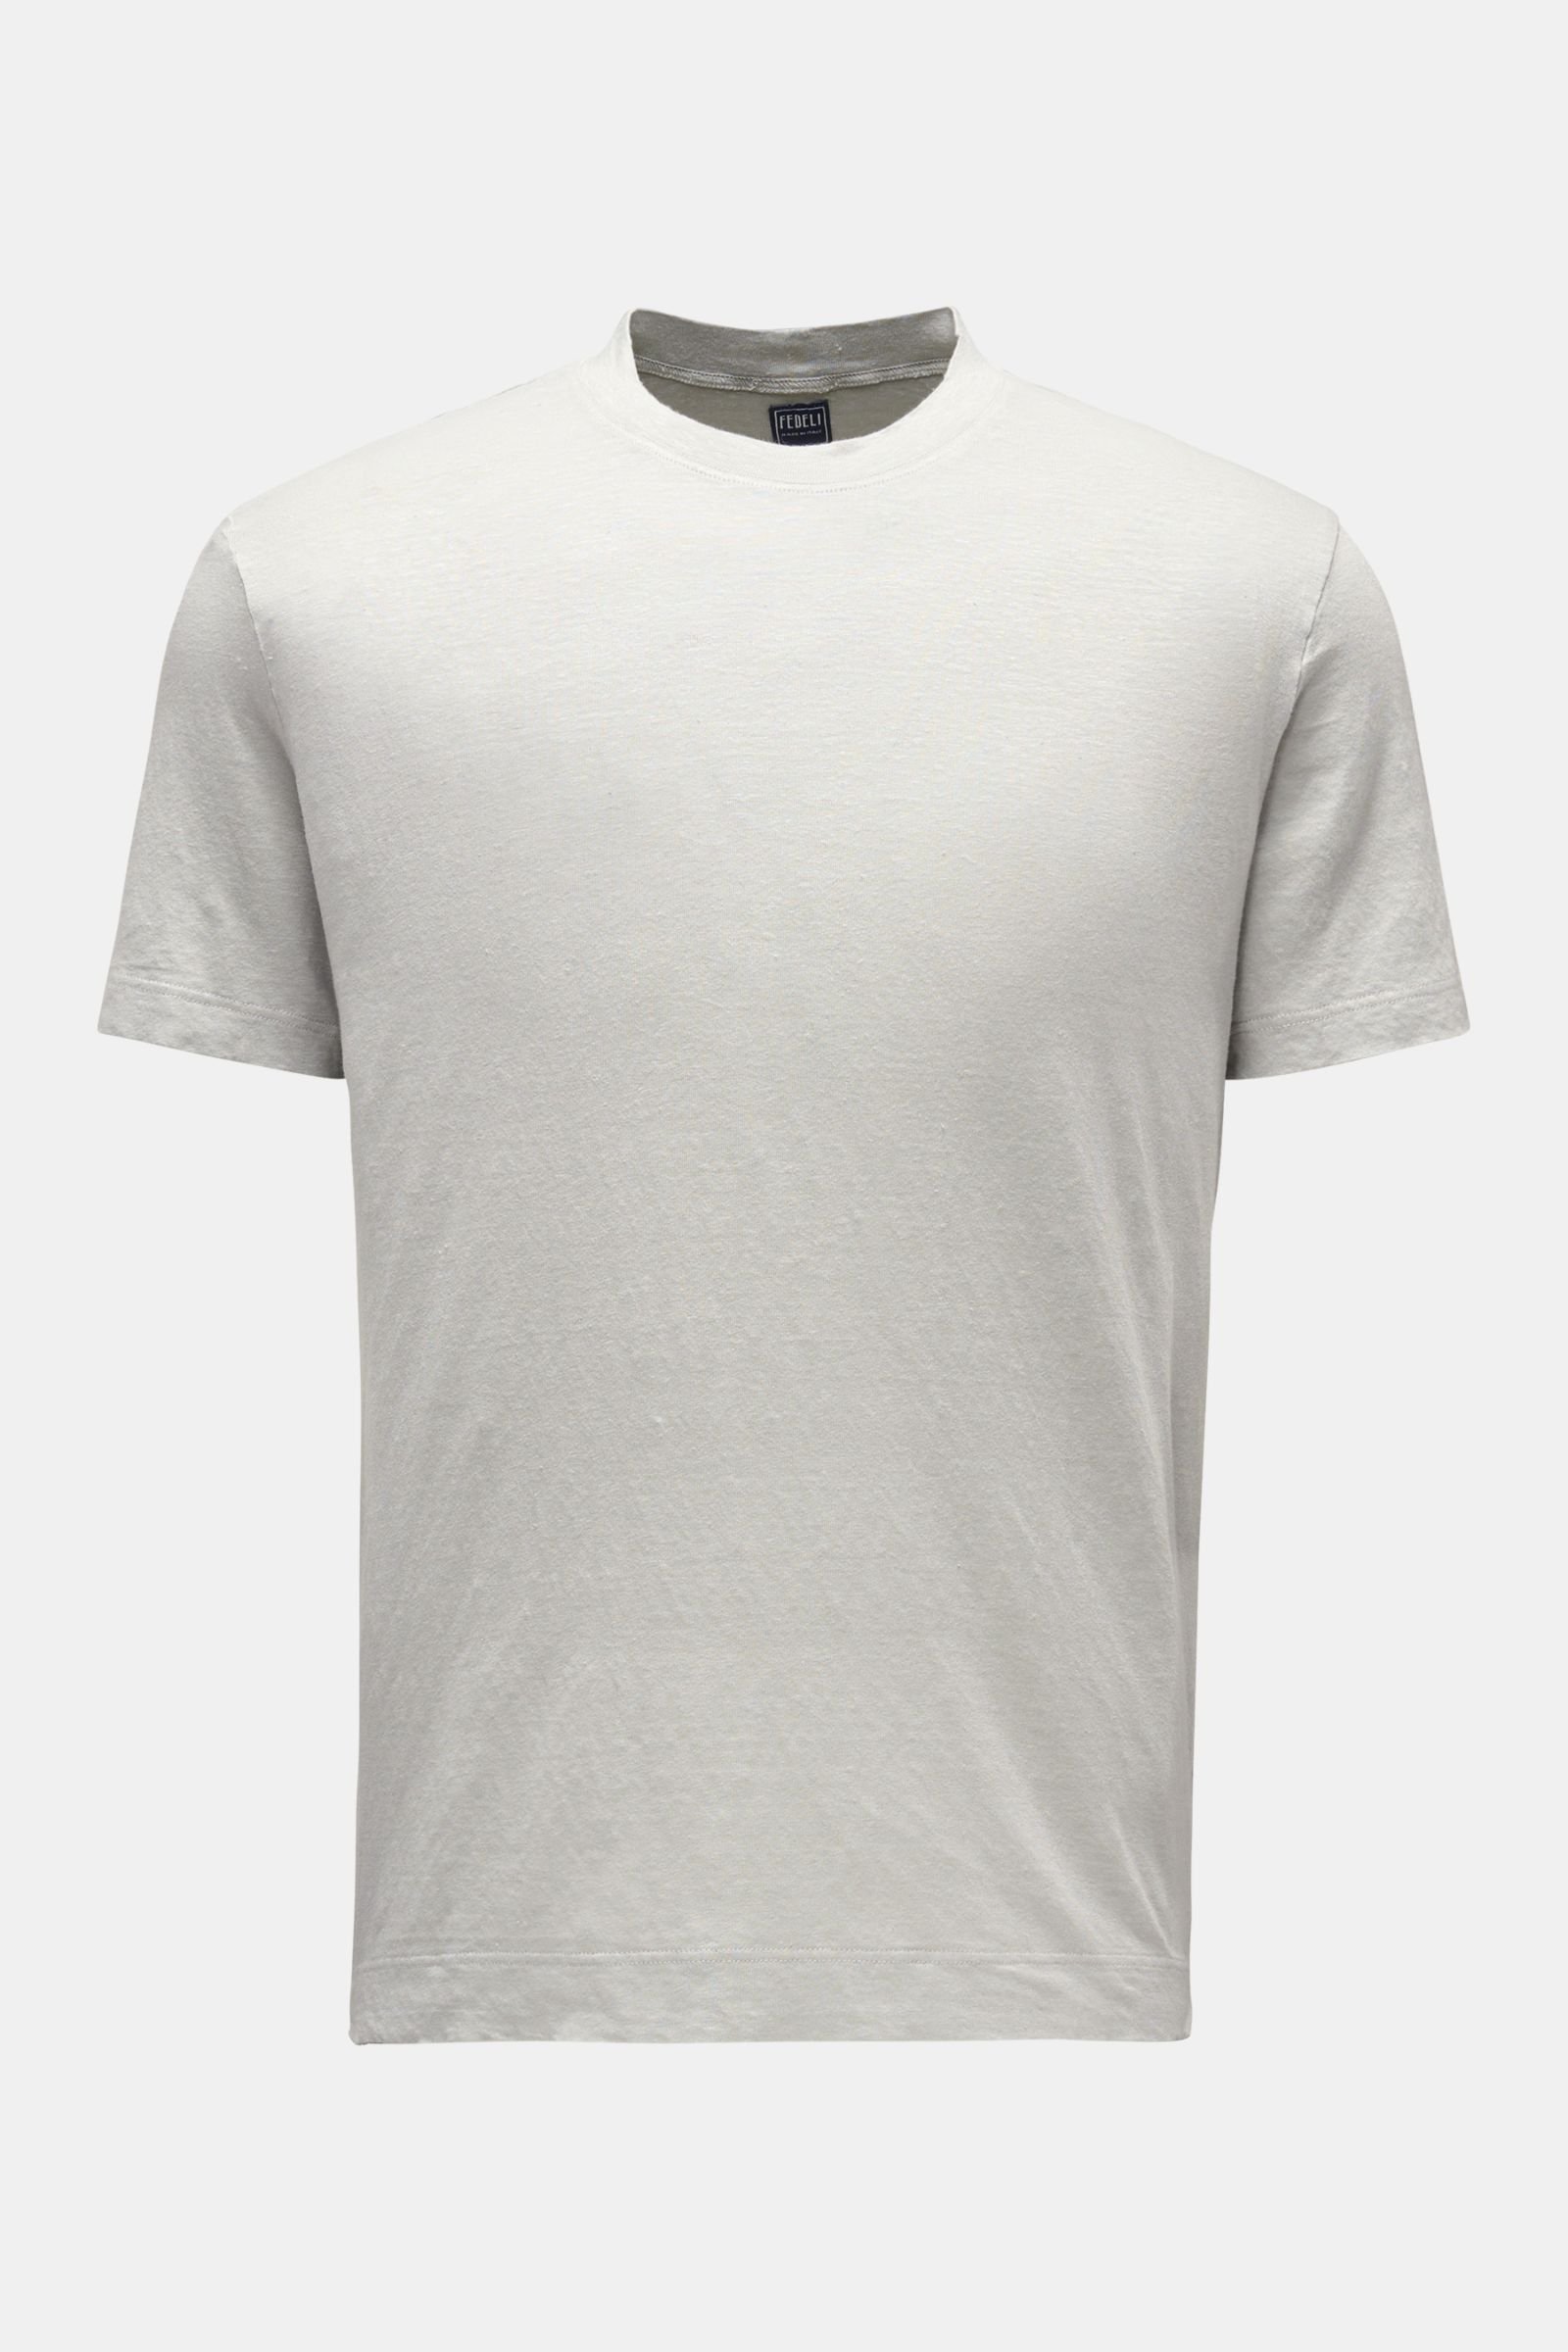 Linen crew neck T-shirt 'Extreme MM' light grey 